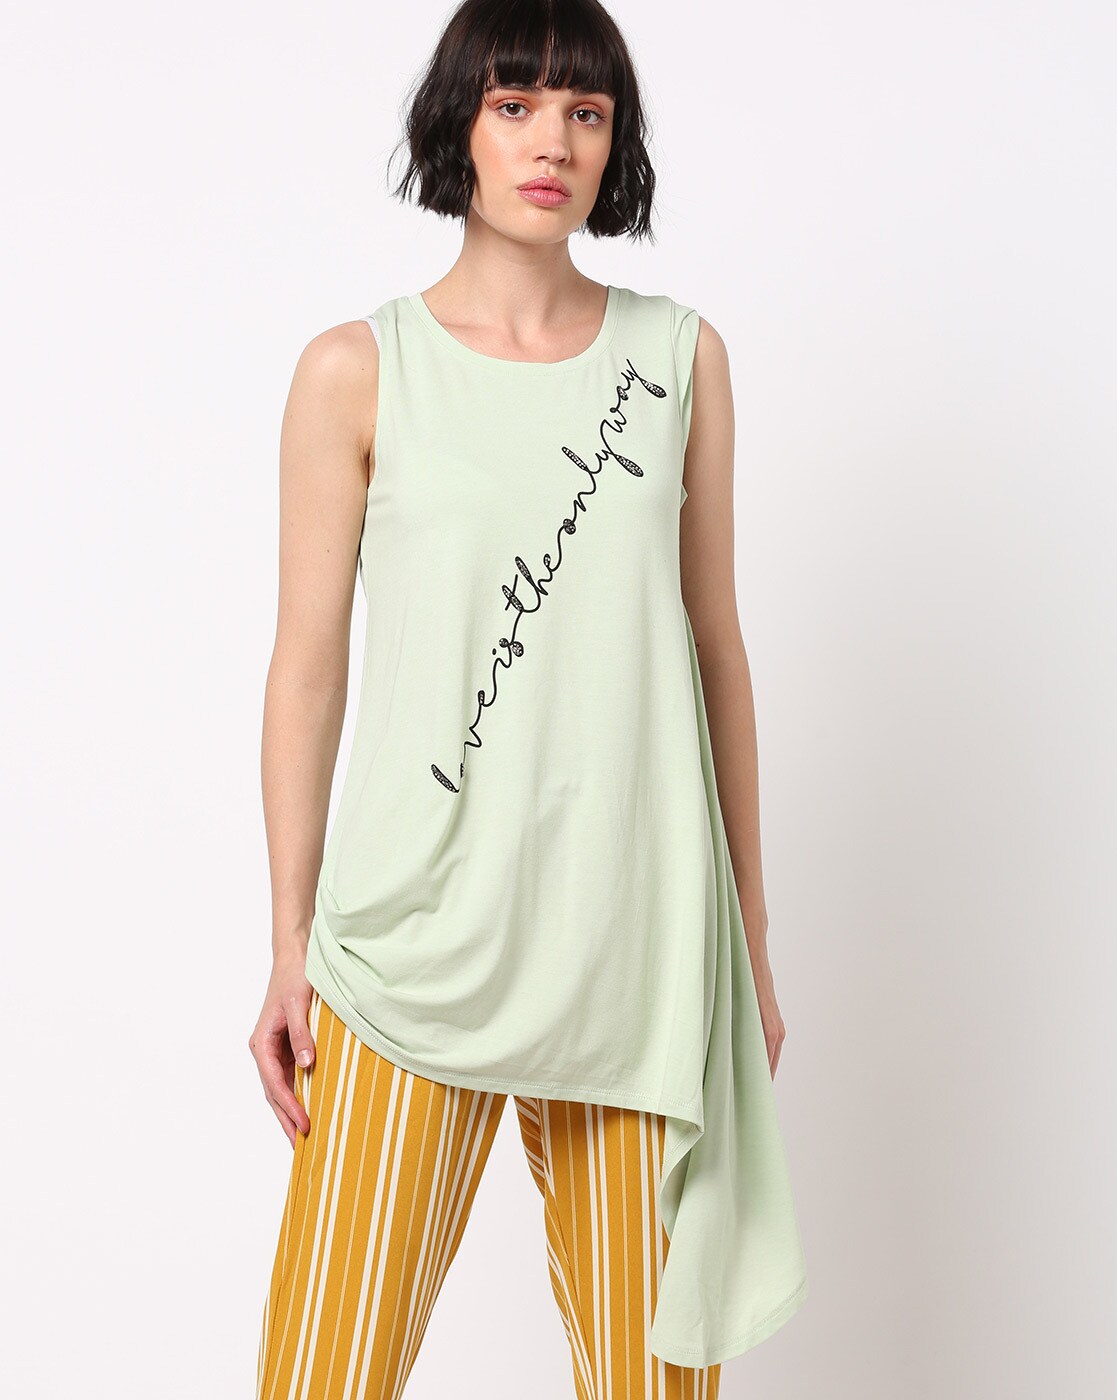 Buy Green Tops for Women by Vero Moda | Ajio.com